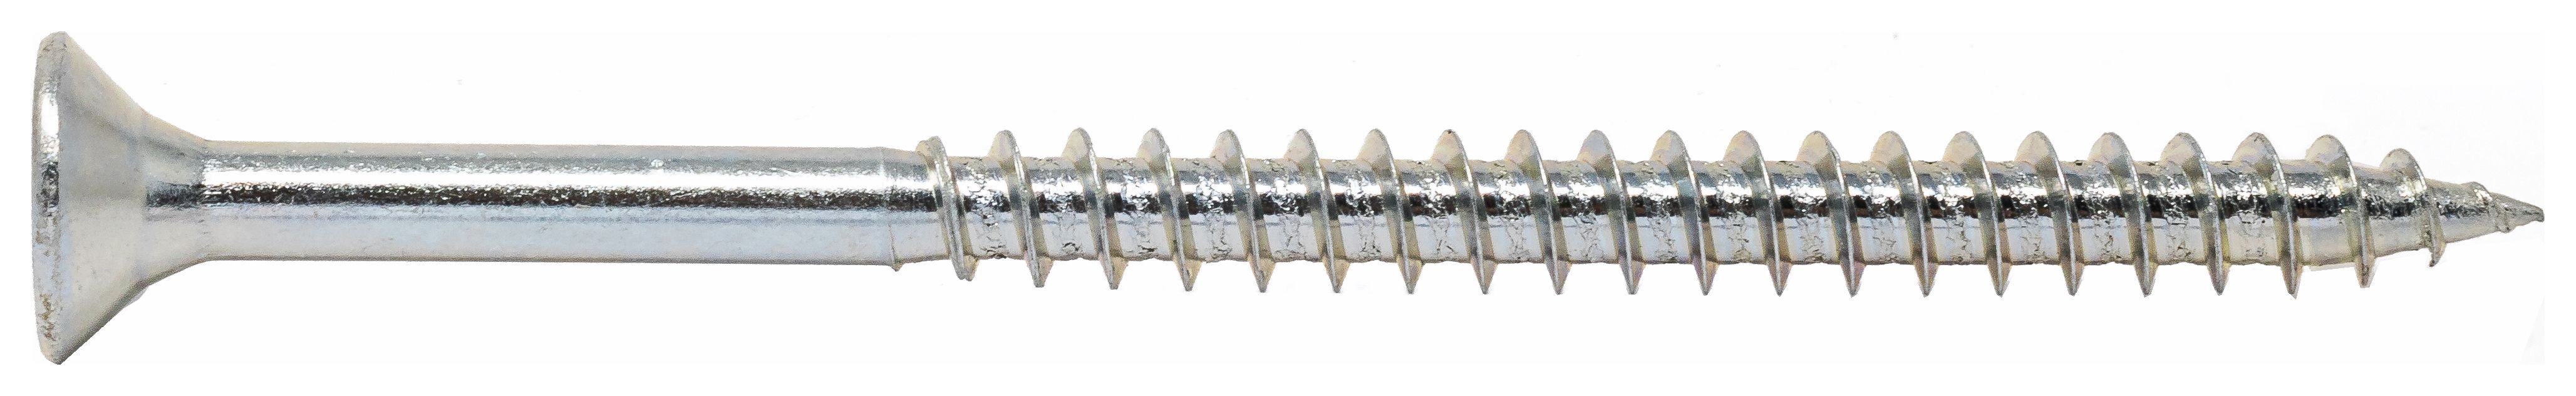 Wickes Single Thread Zinc Plated Screw - 5 X 40mm Pack Of 200